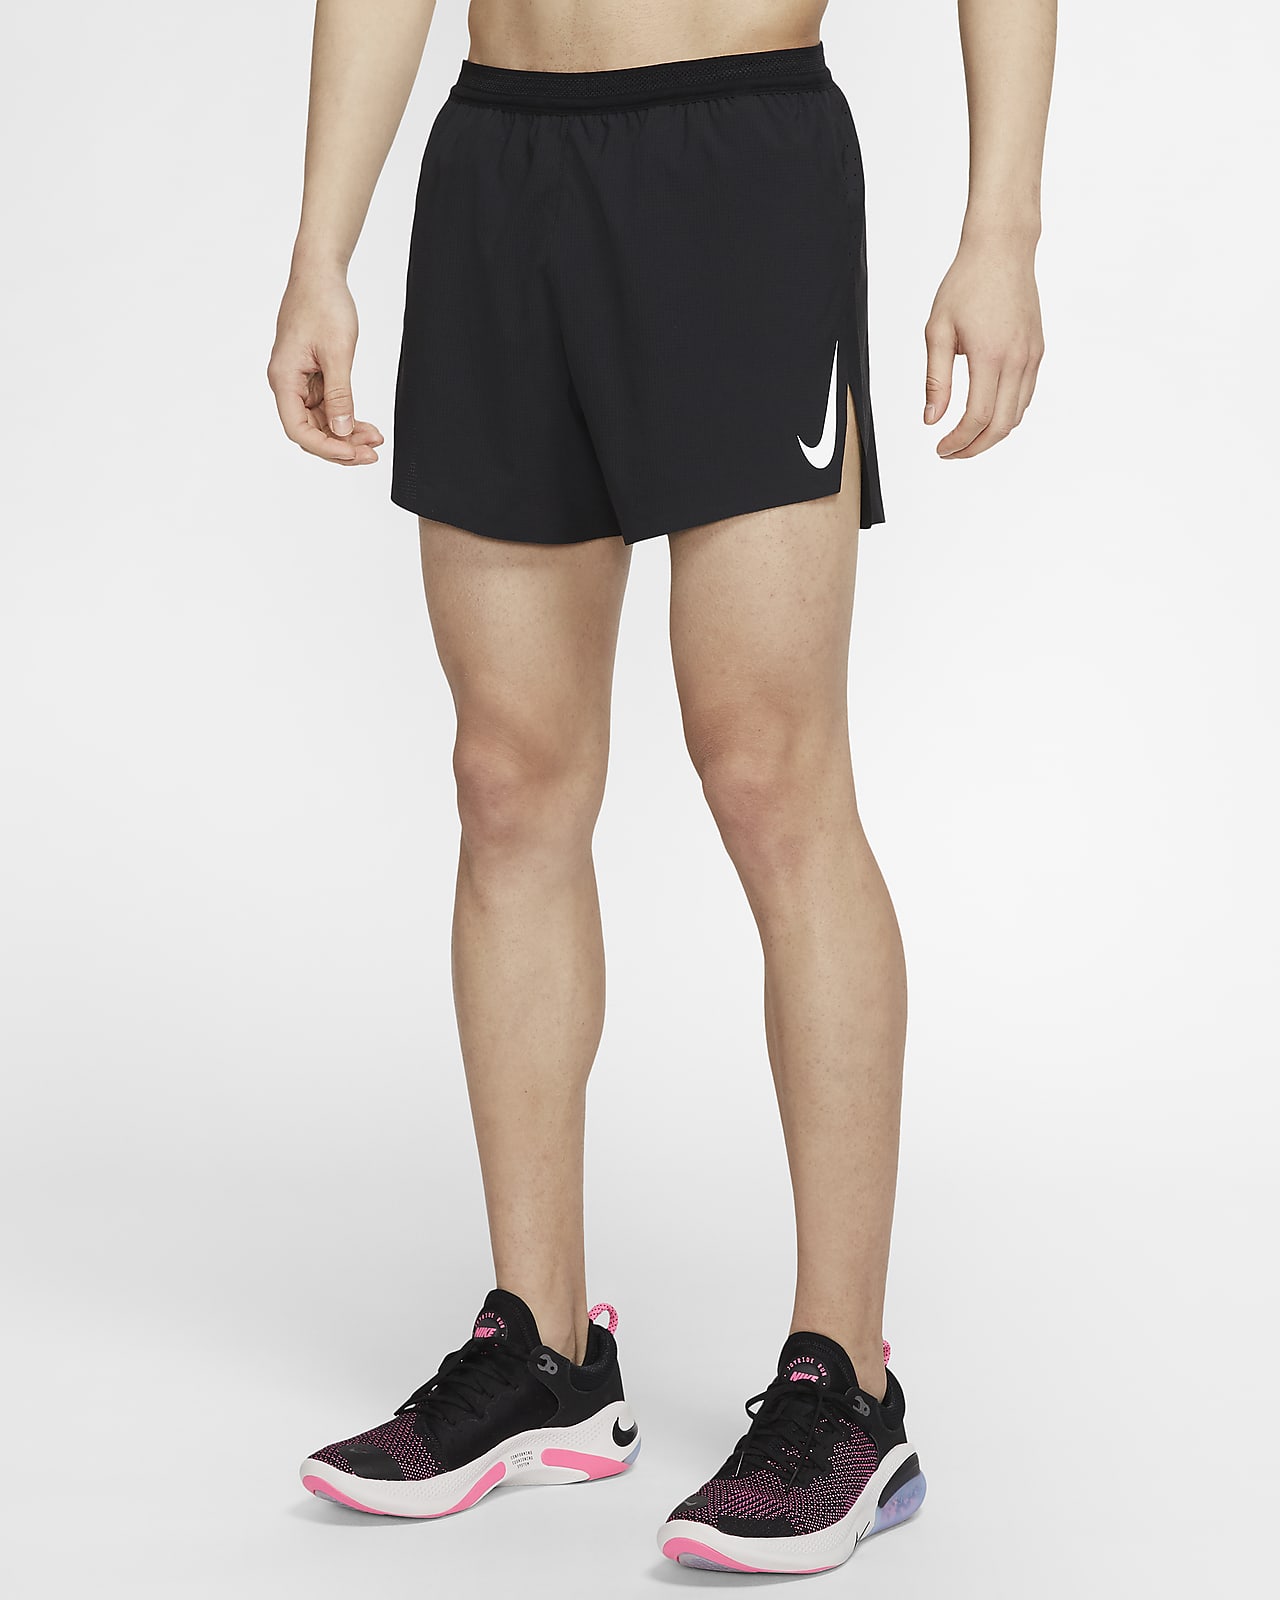 Bull Darts throne Nike AeroSwift Men's 4" Running Shorts. Nike JP